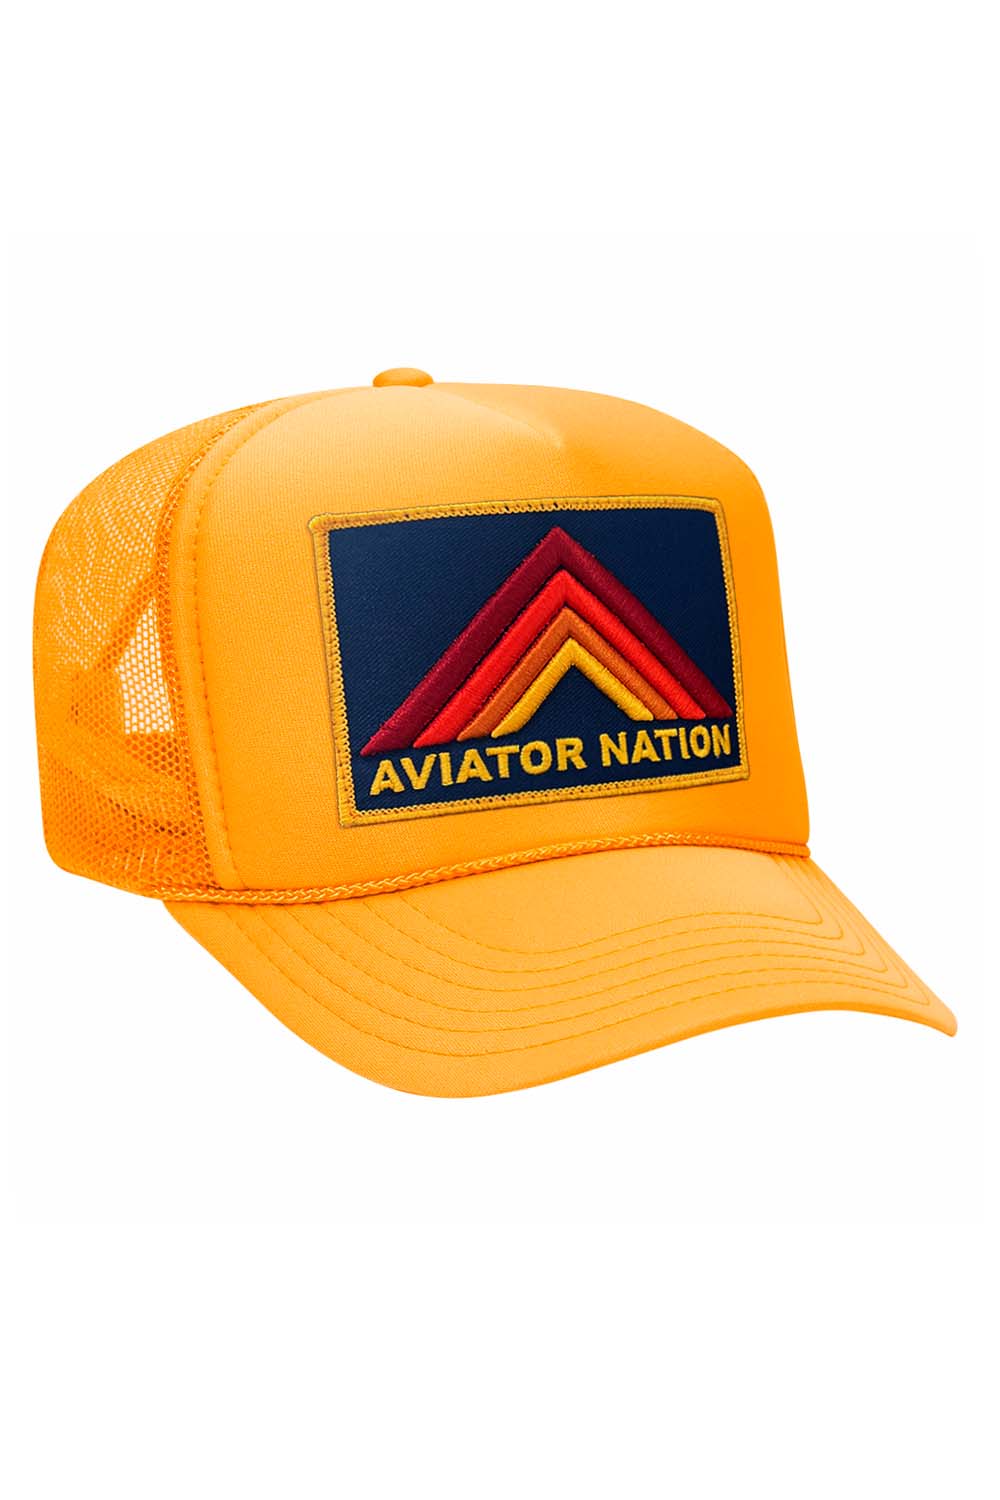 MOUNTAIN STRIPE VINTAGE TRUCKER HAT HATS Aviator Nation OS GOLD 